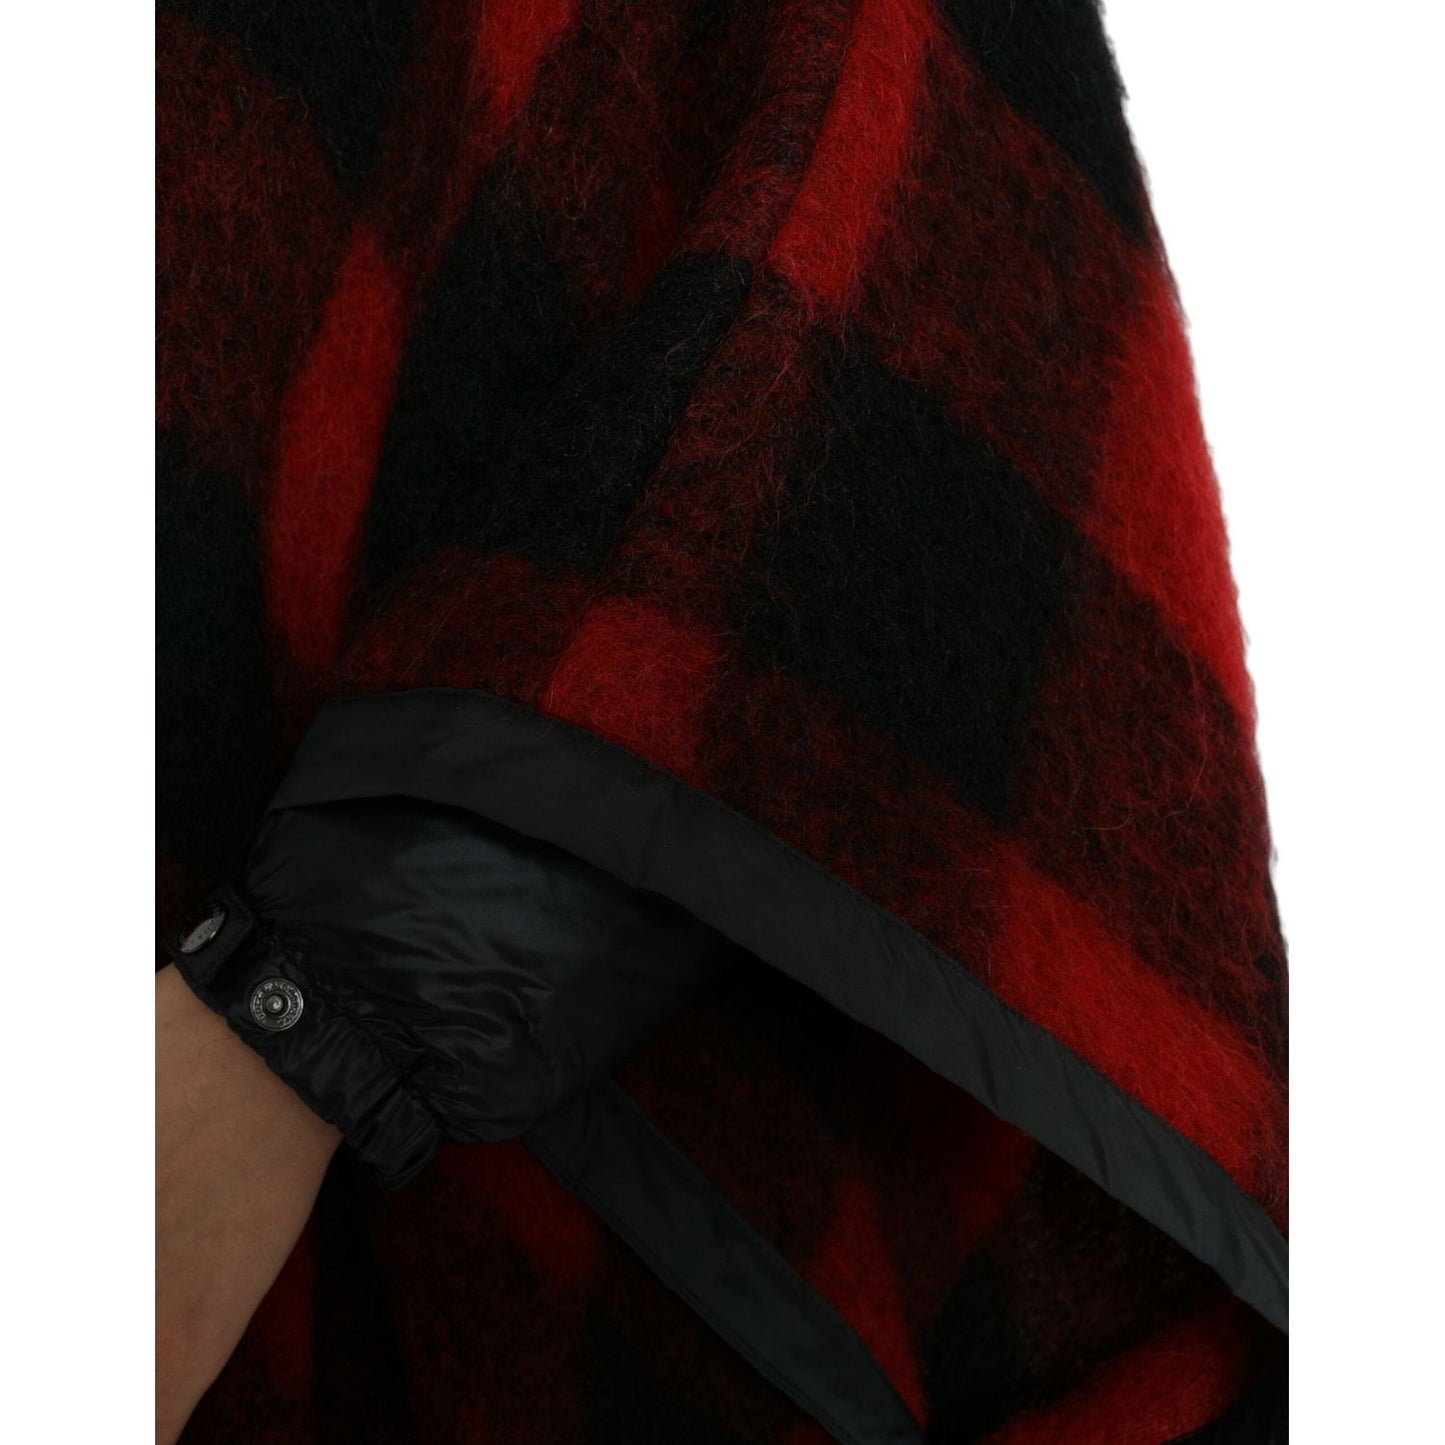 Dolce & Gabbana Elegant Buffalo Check Poncho Jacket black-red-buffalo-check-hooded-poncho-jacket